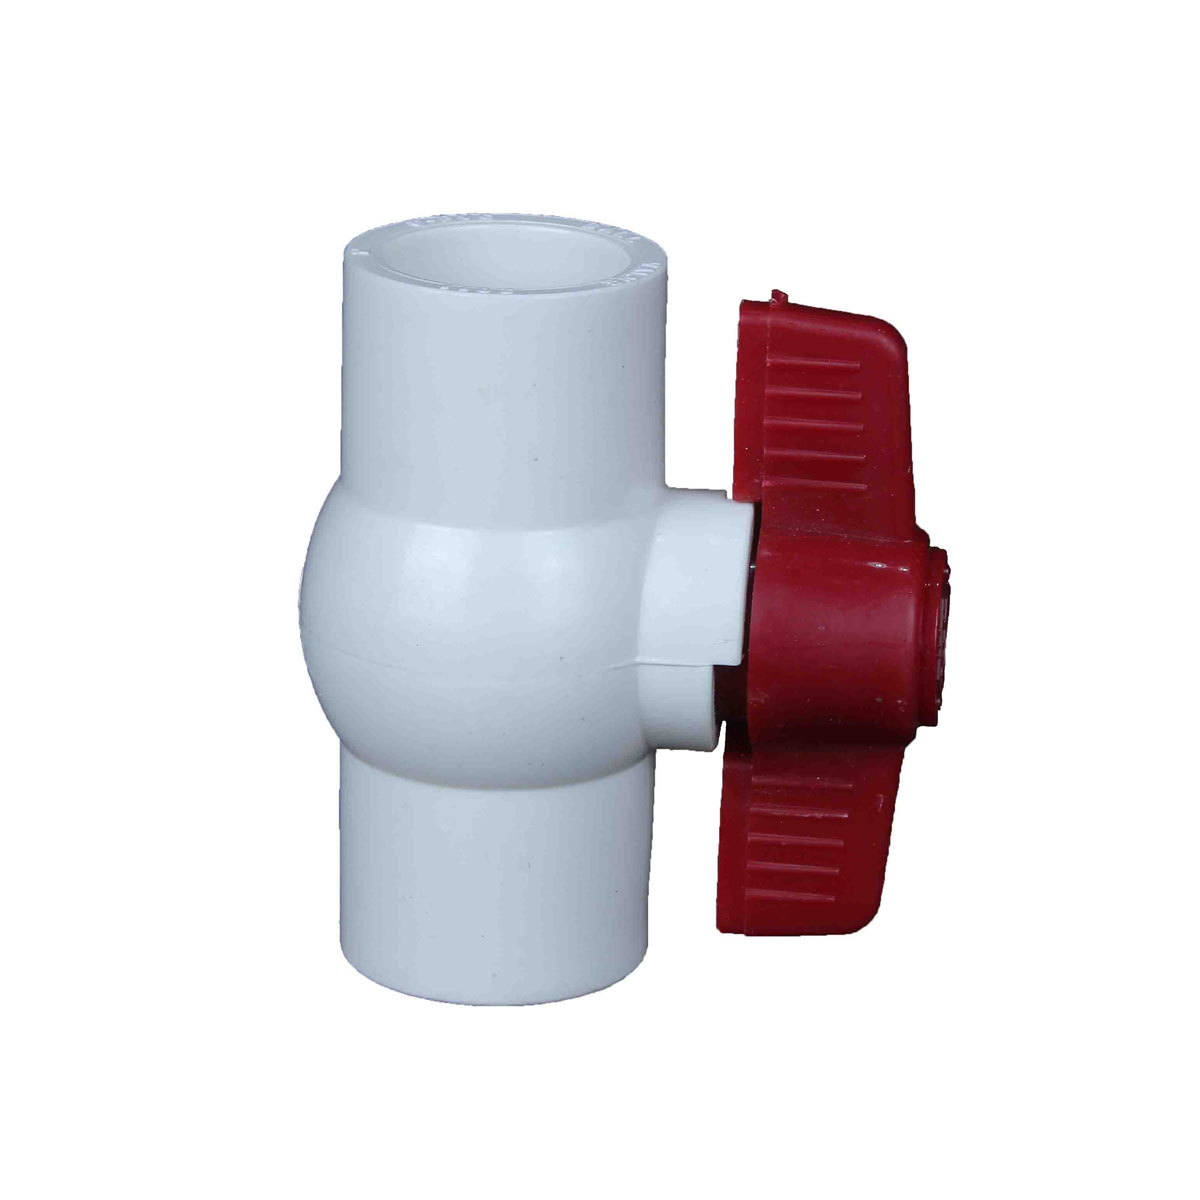 PVC water supply - ball valve